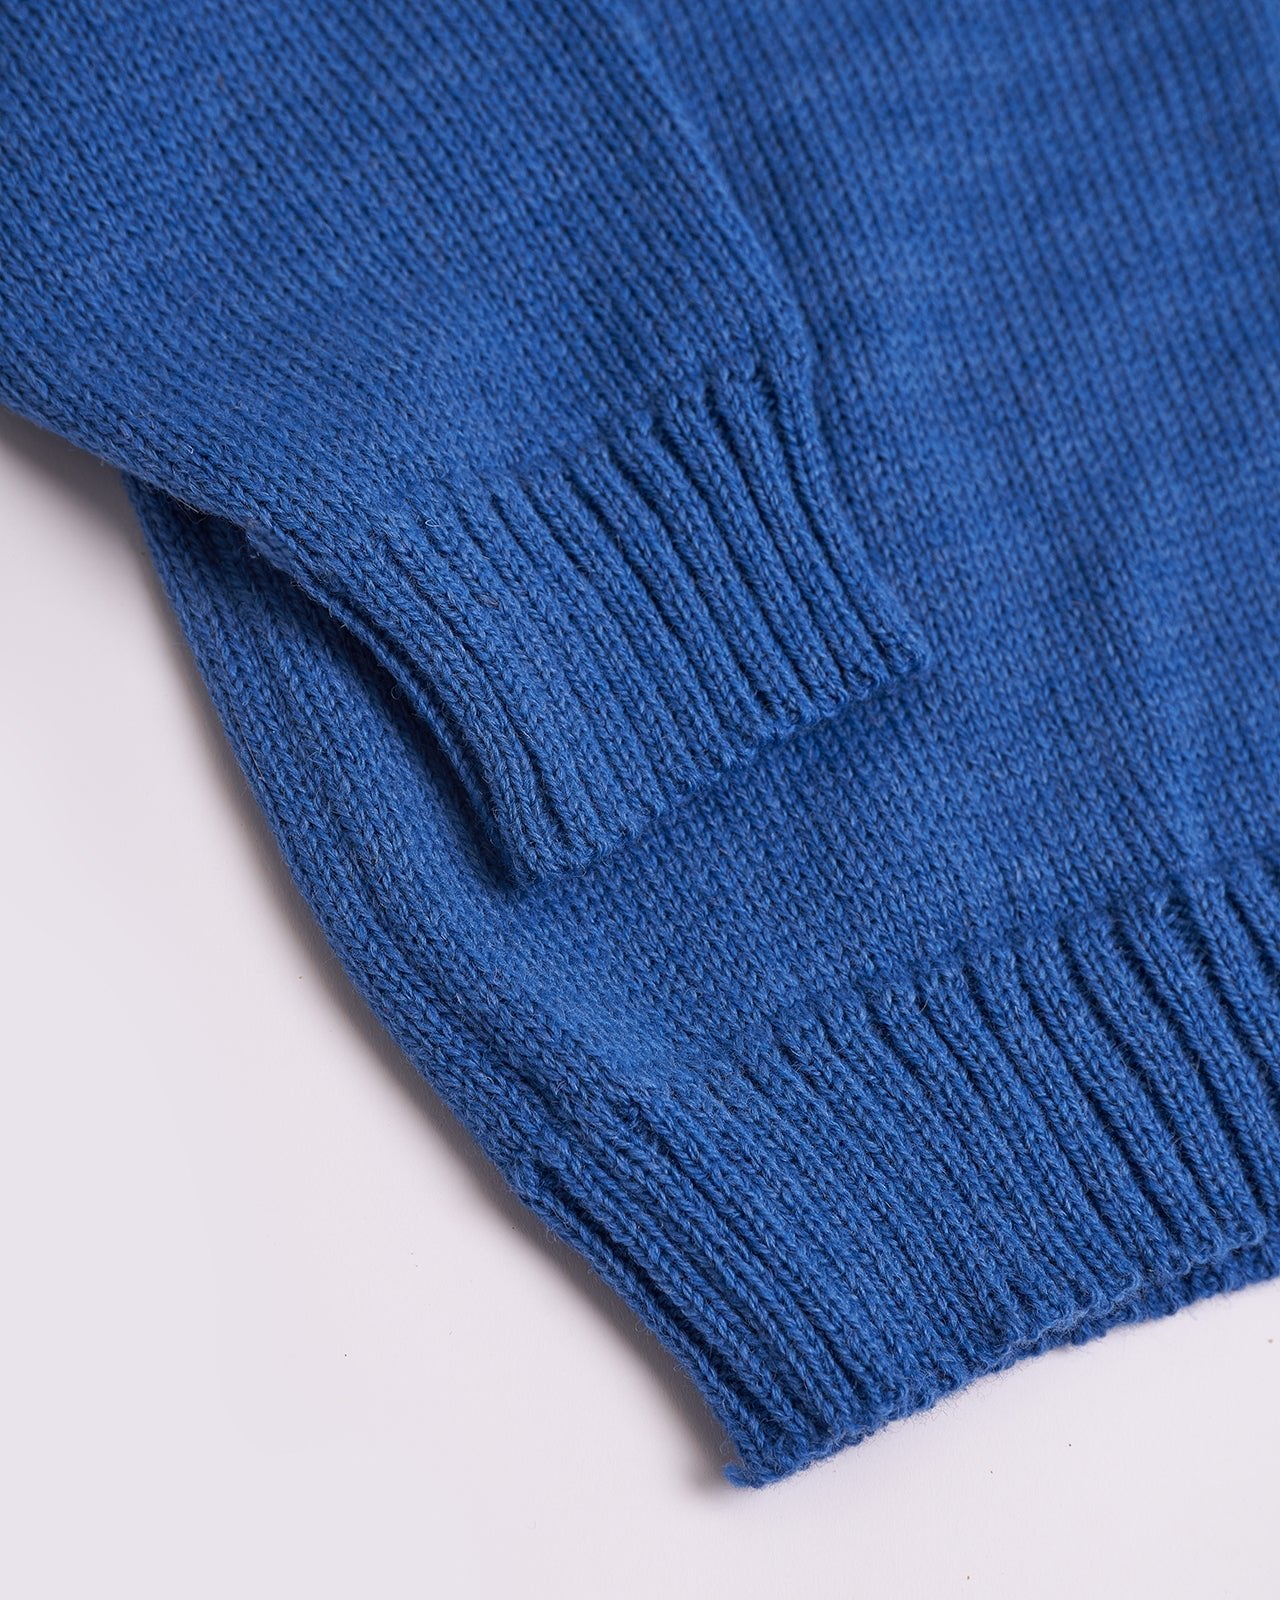 blue wool sweater details